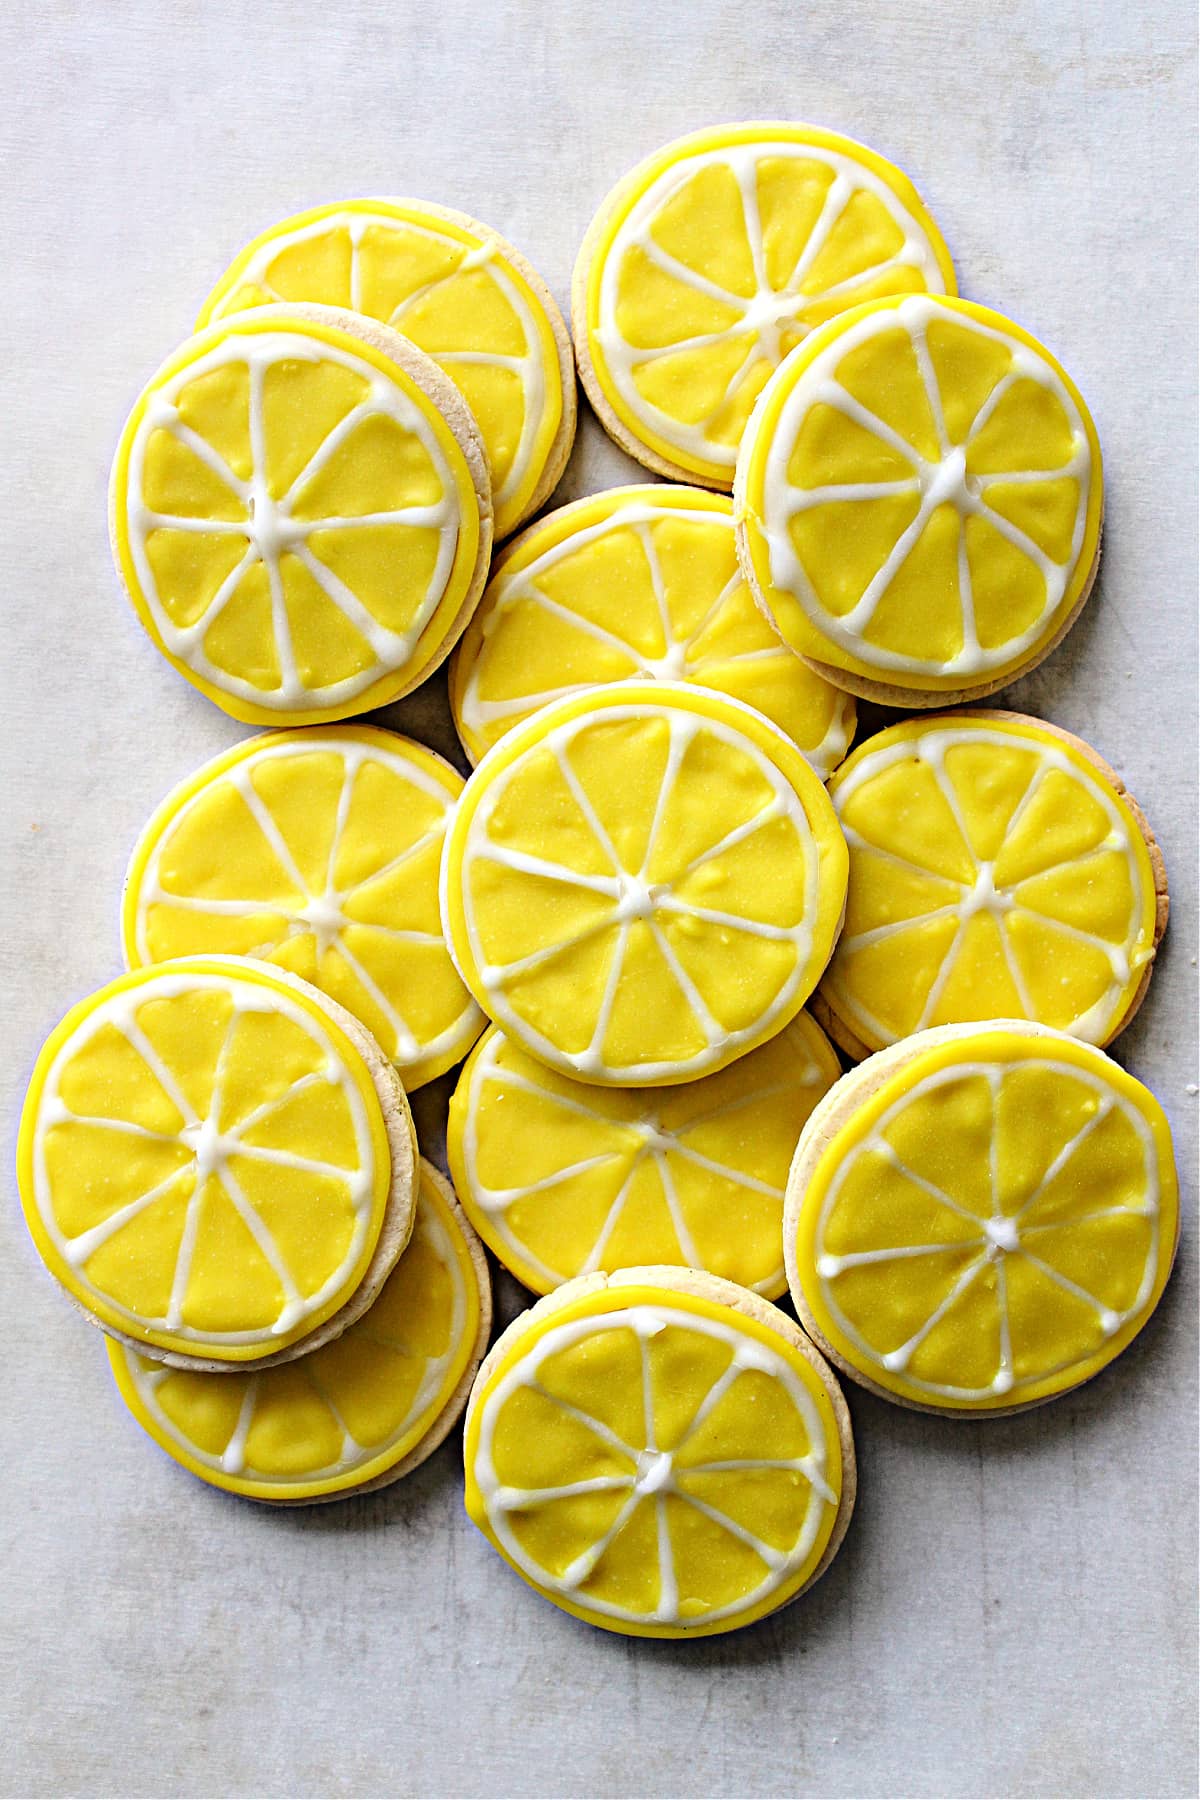 Round cutout sugar cookies iced like segmented lemon slices.